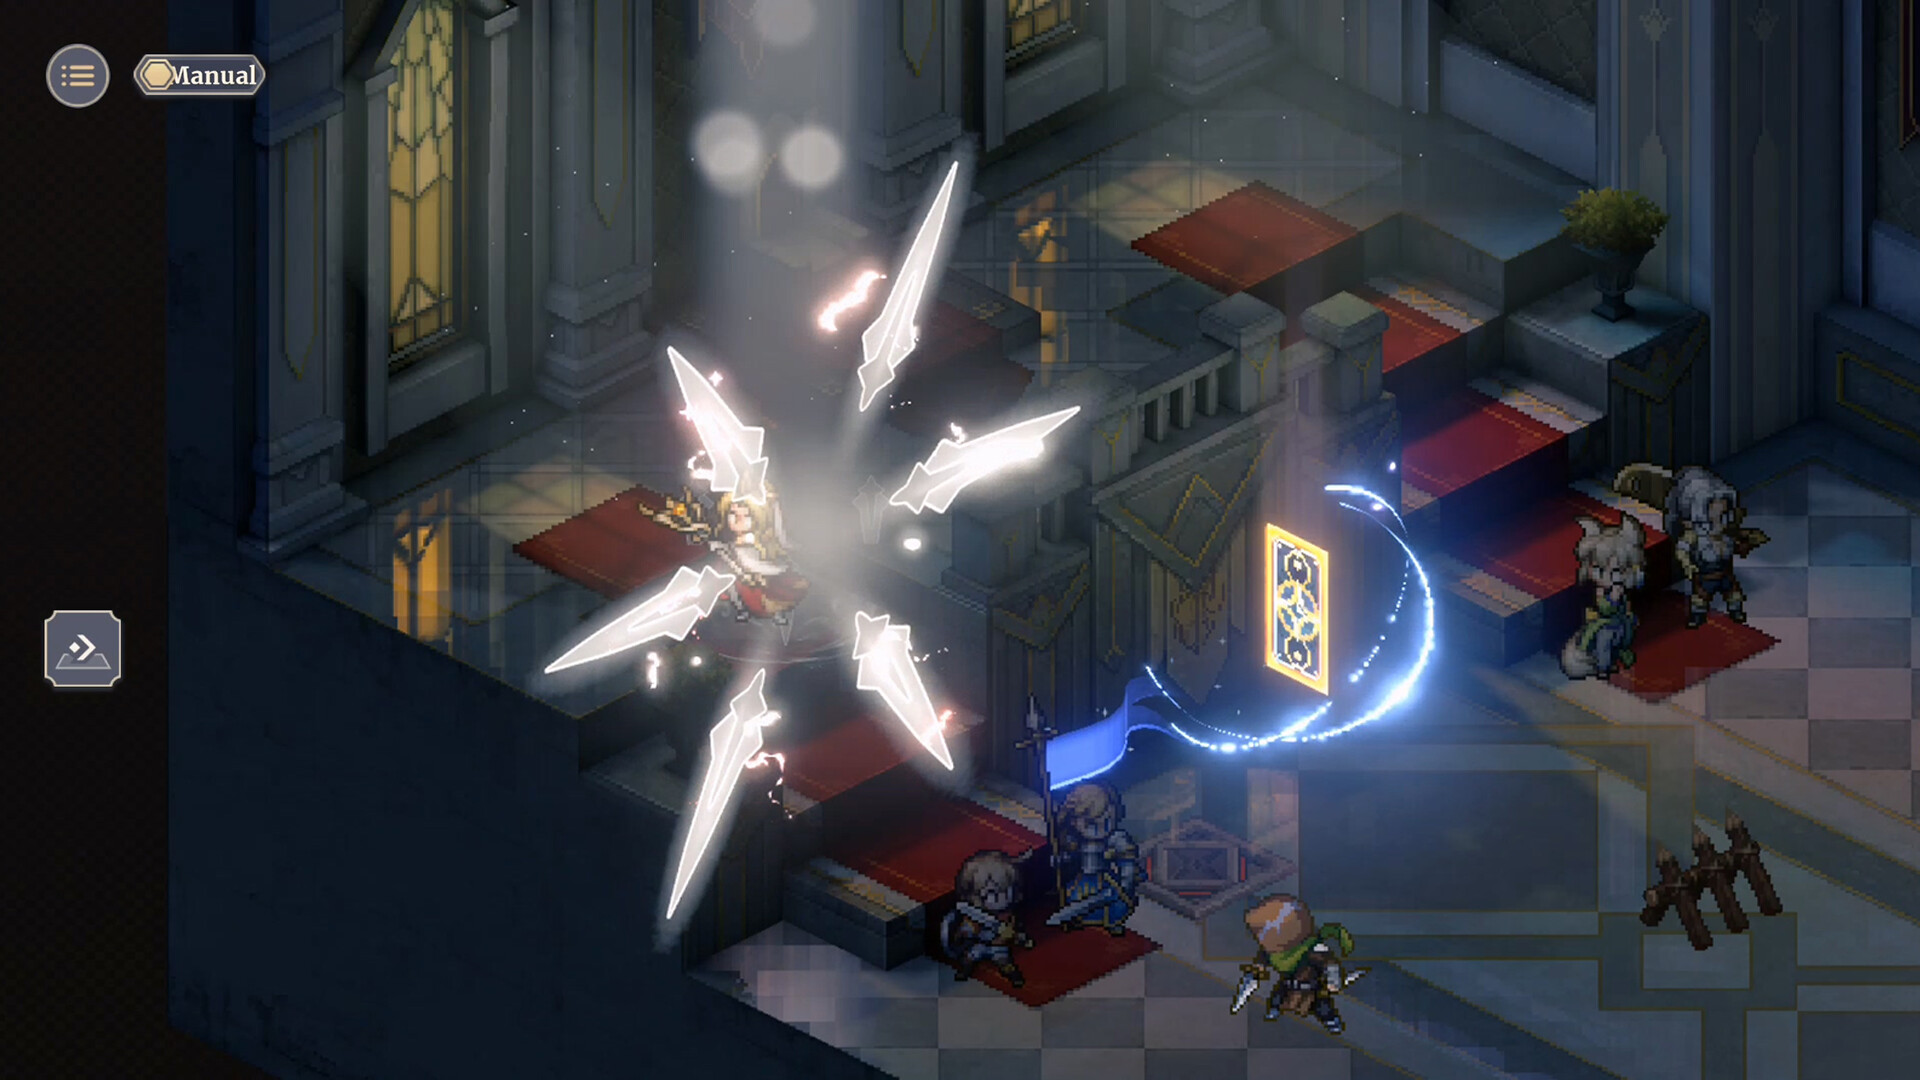 Sword of Convallaria - Final Fantasy composer graces new pixel-art strategy  RPG - MMO Culture